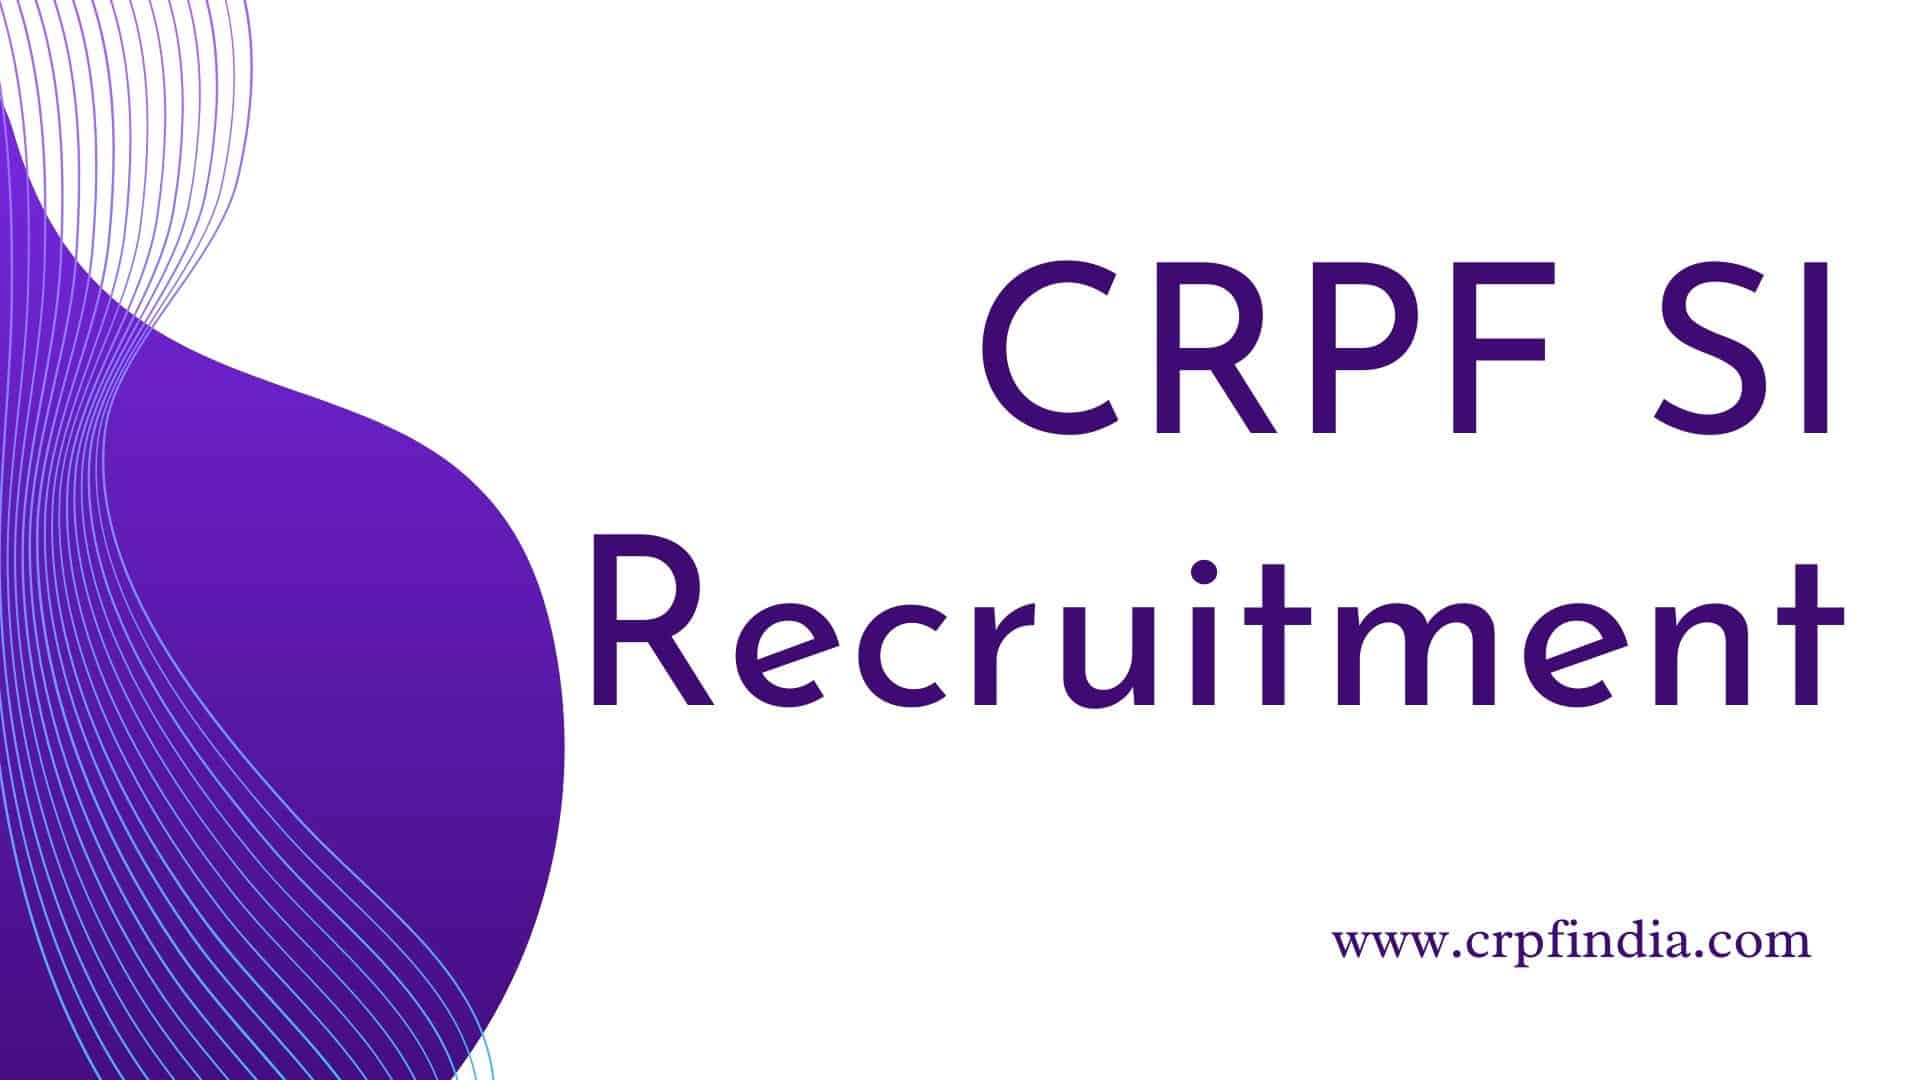 CRPF SI Recruitment Syllabus, Exam Pattern, Preparation Tips, Cut Off Marks, Paper Analysis